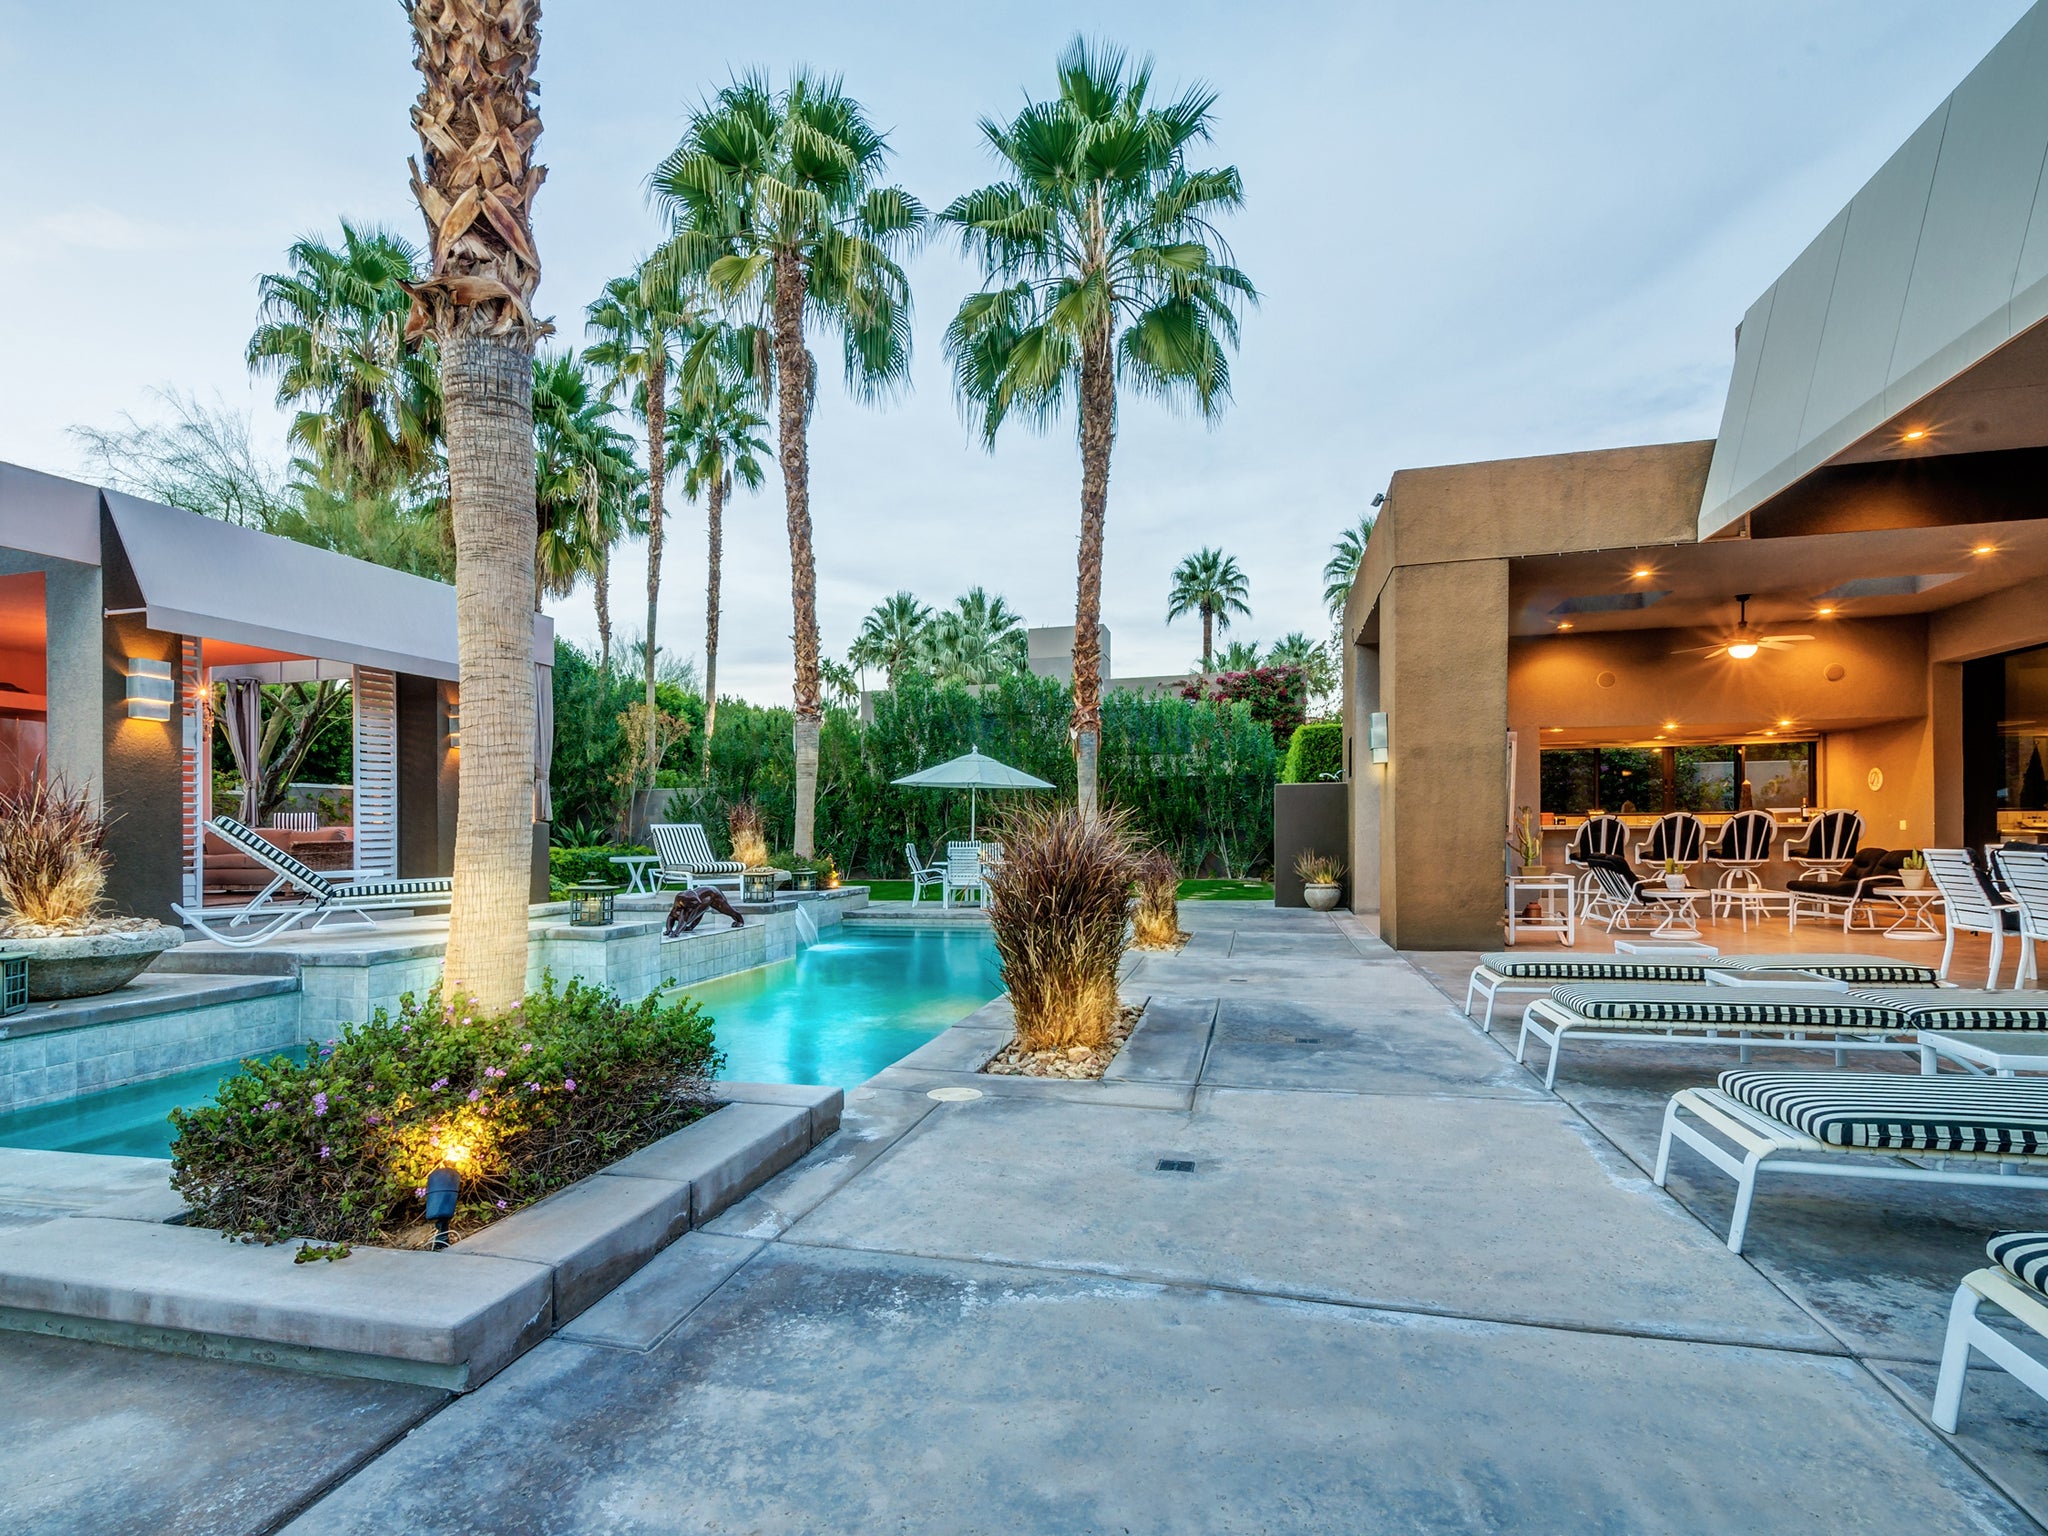 Dame Elizabeth Taylor’s former home in Palm Springs